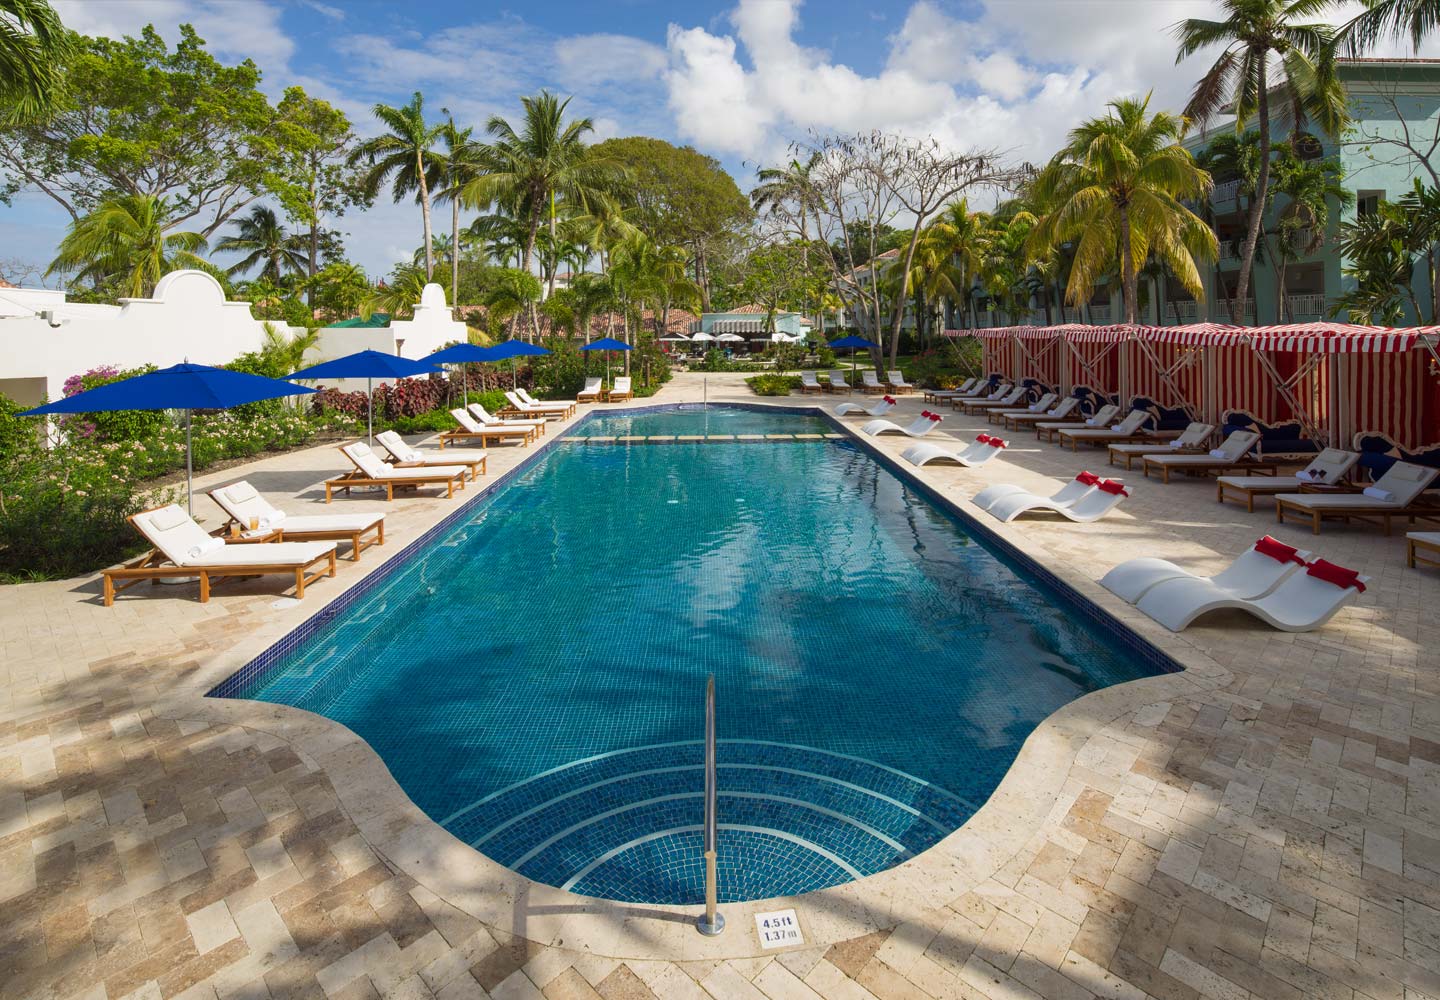 Sandals Barbados Pool 2